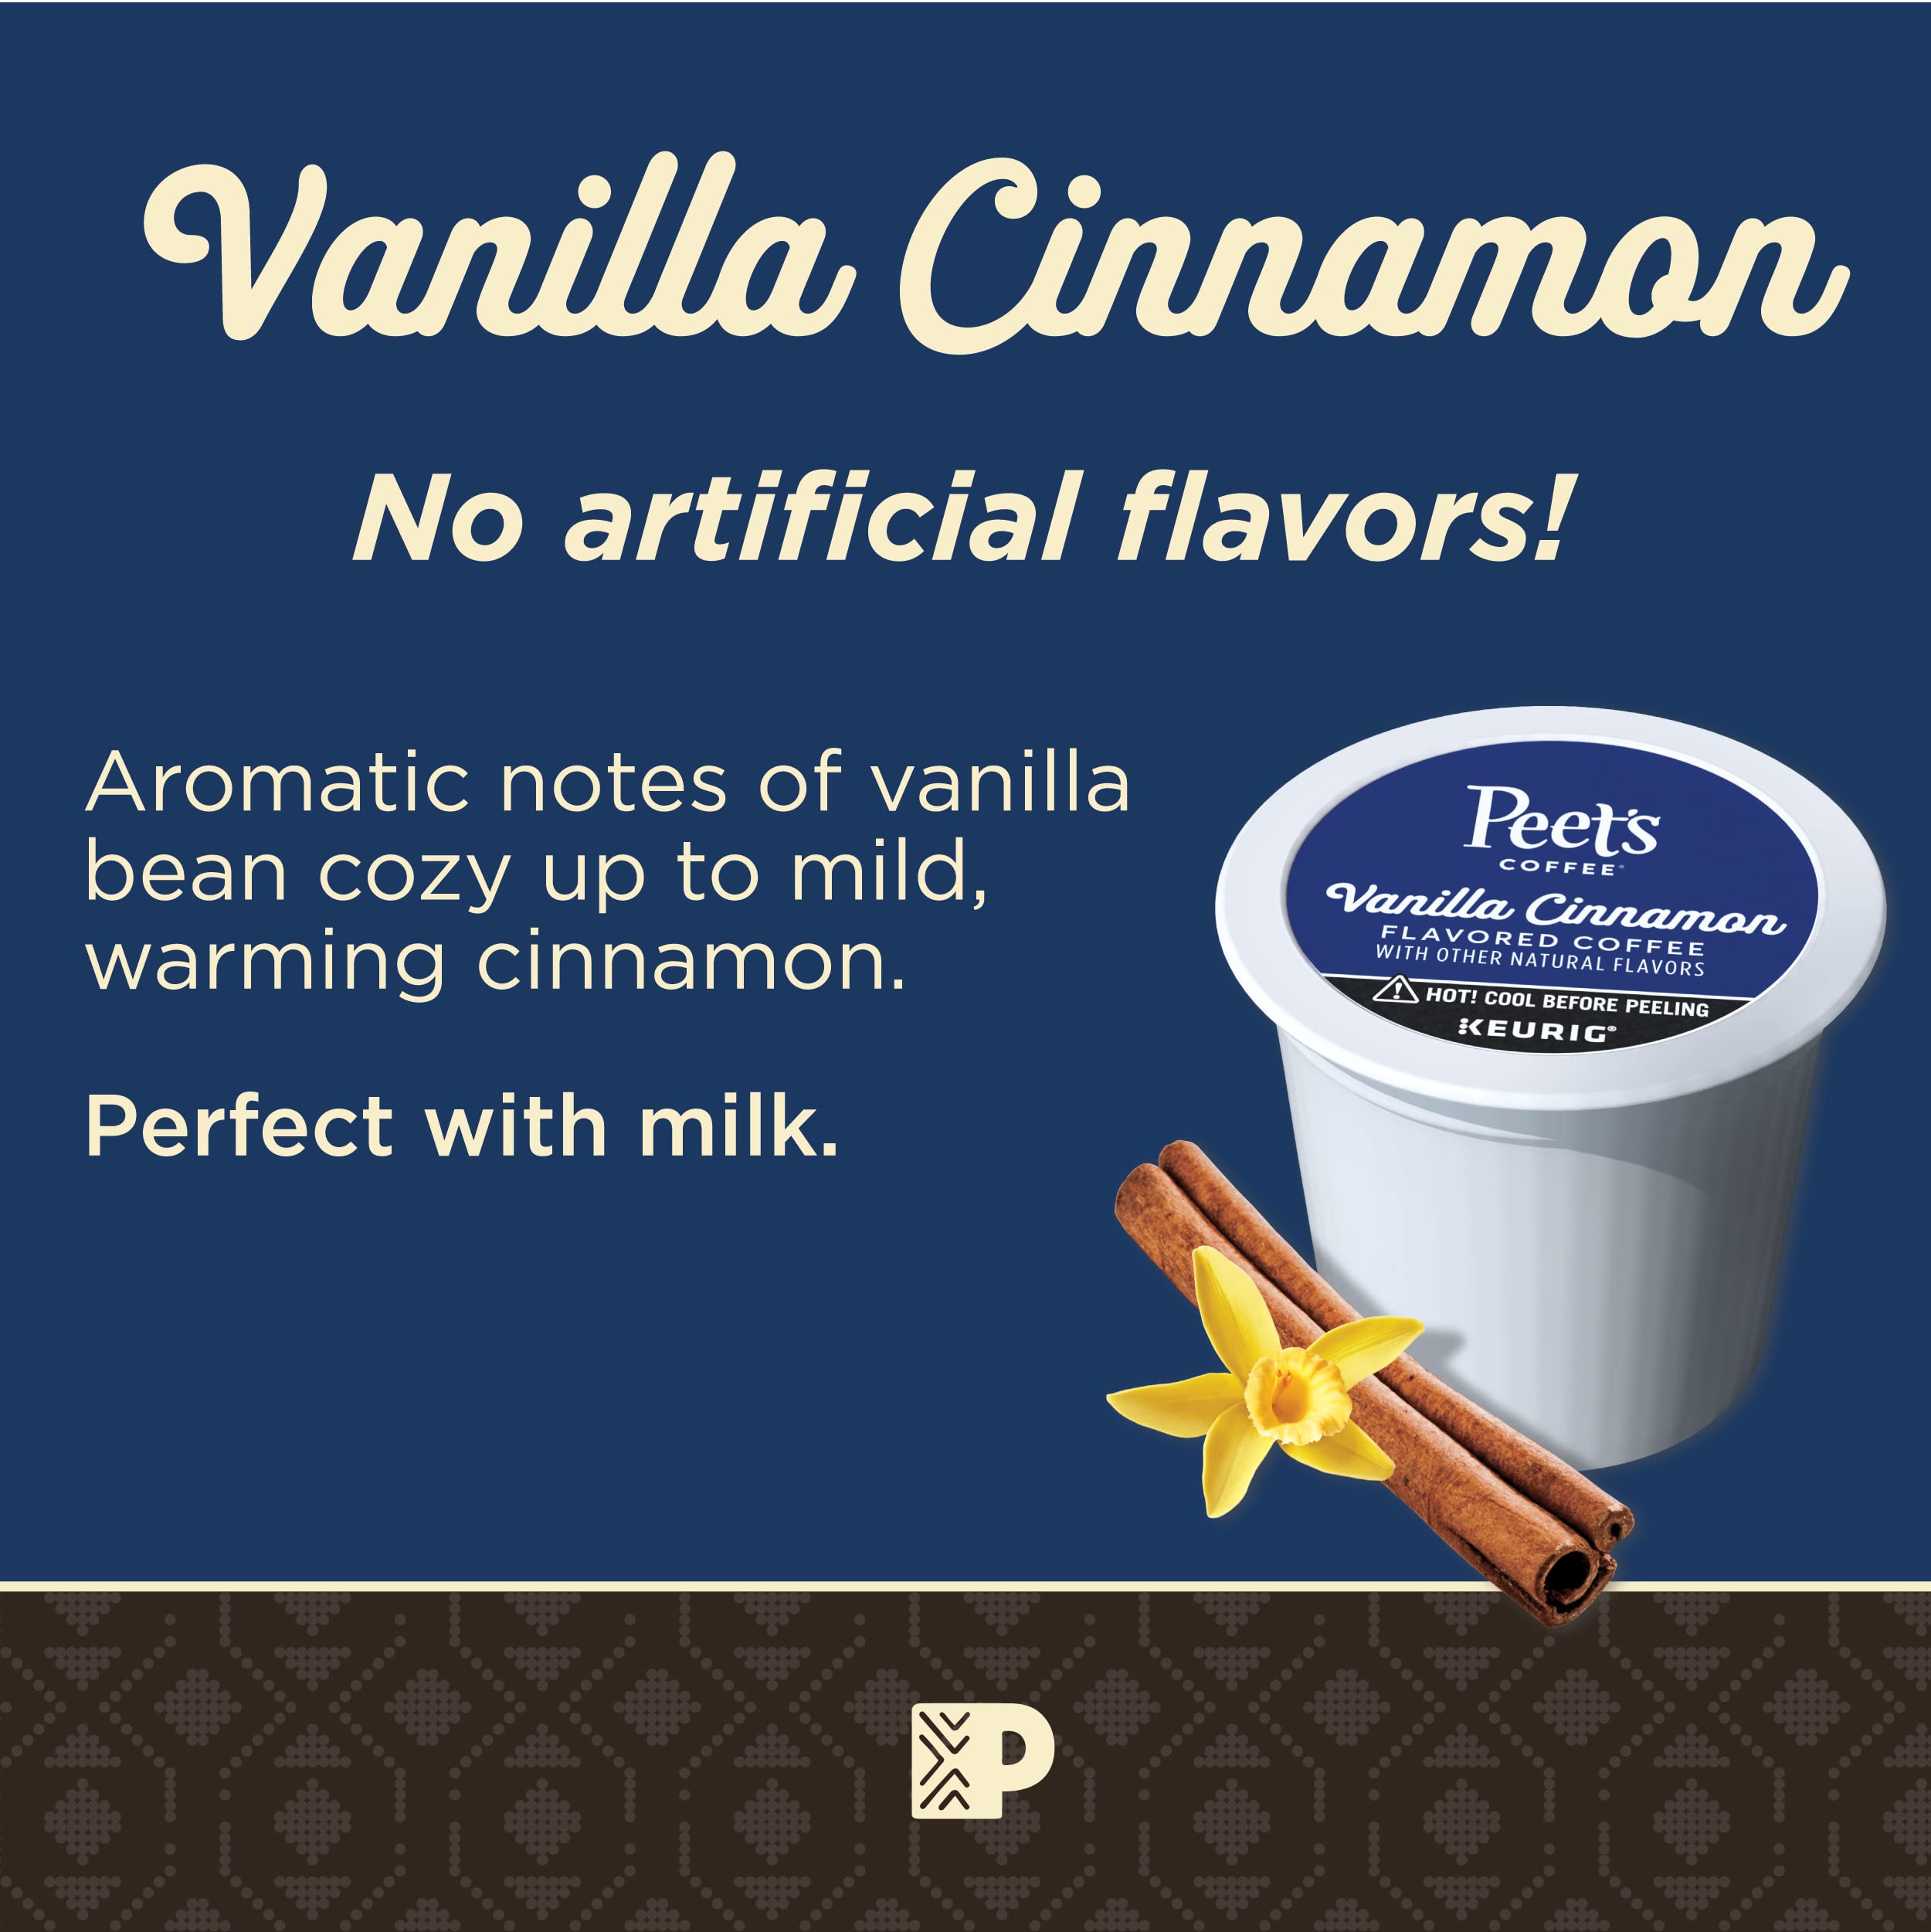 Peet’s Coffee, Vanilla Cinnamon - Flavored Coffee, 10 K-Cup Pods for Keurig Brewers (1 box of 10 pods), Light Roast